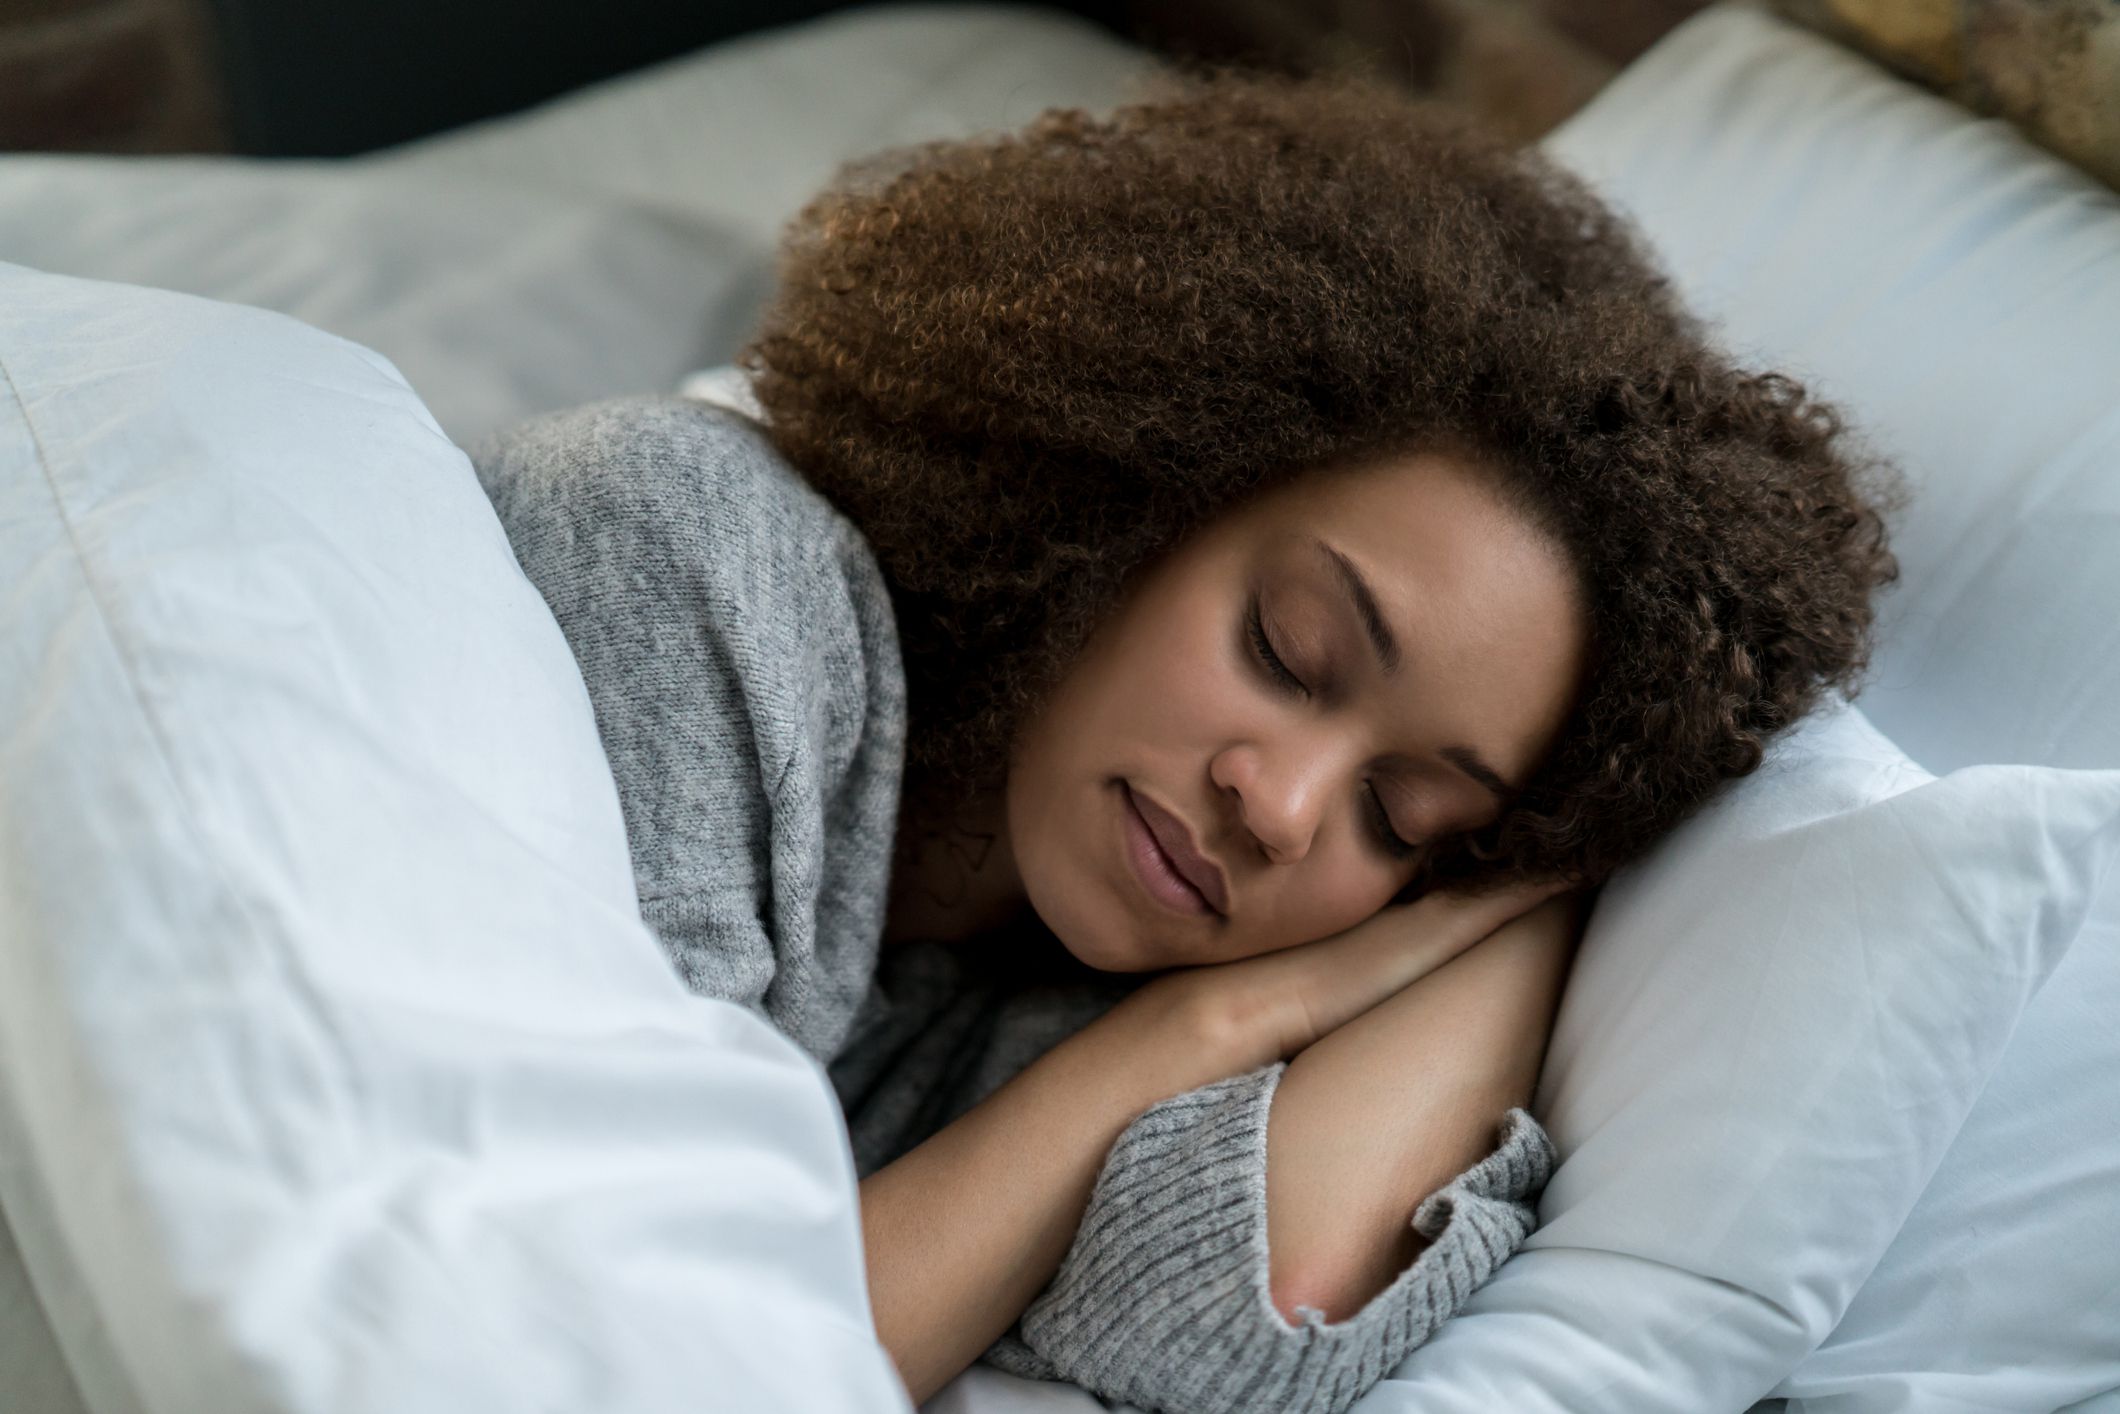 How long do you sleep on trazodone